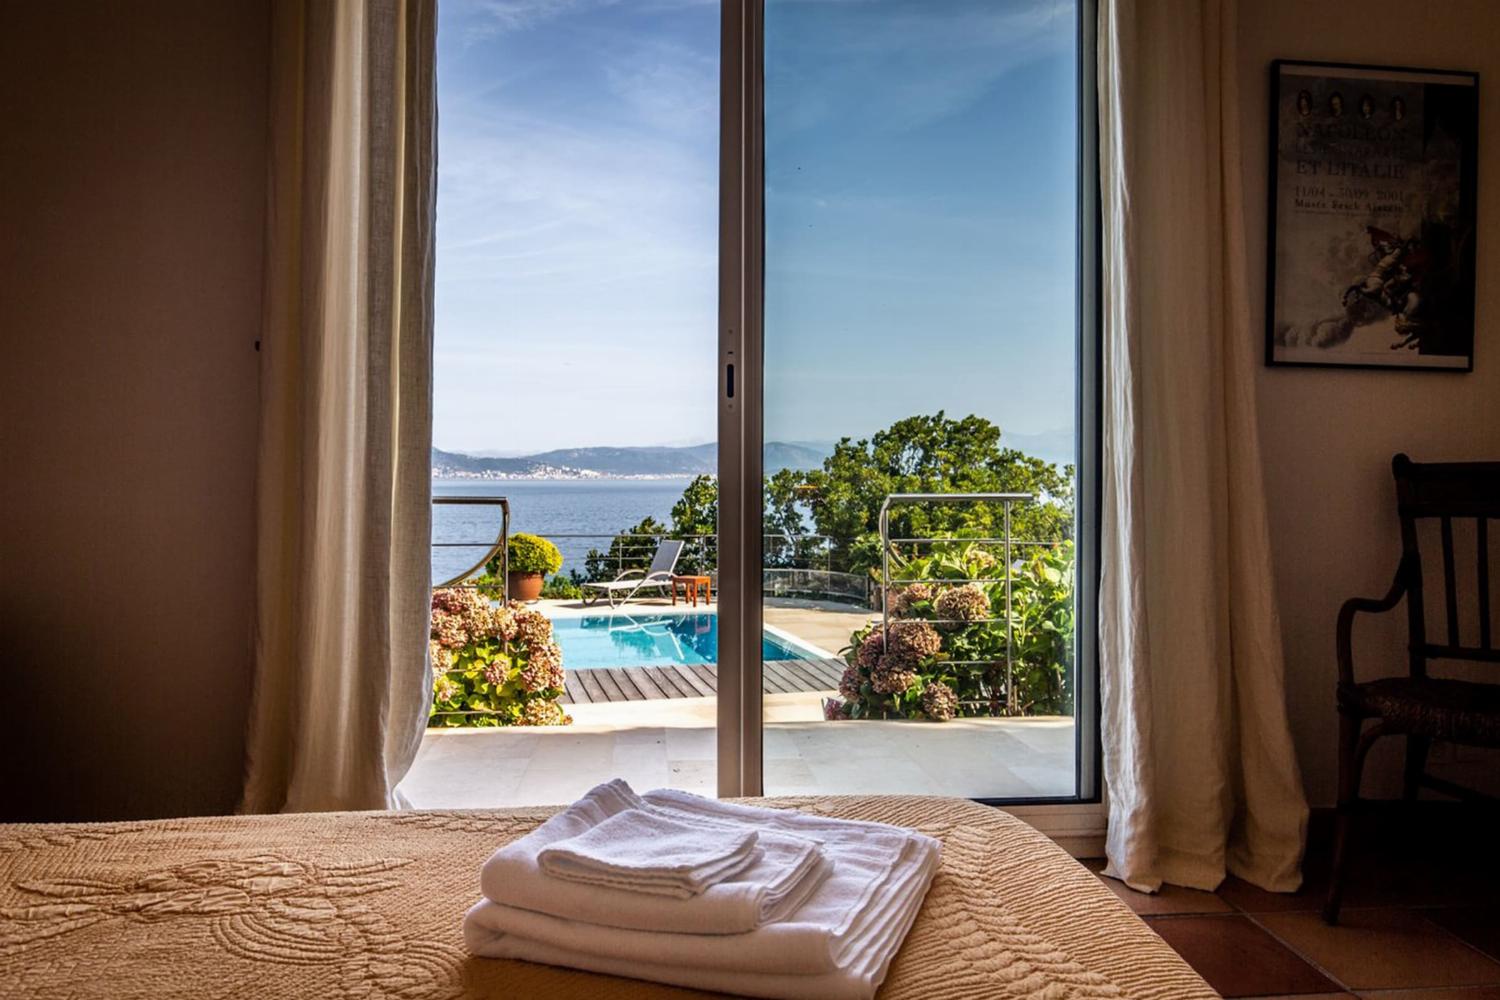 Chambre | Villa de vacances en Corse